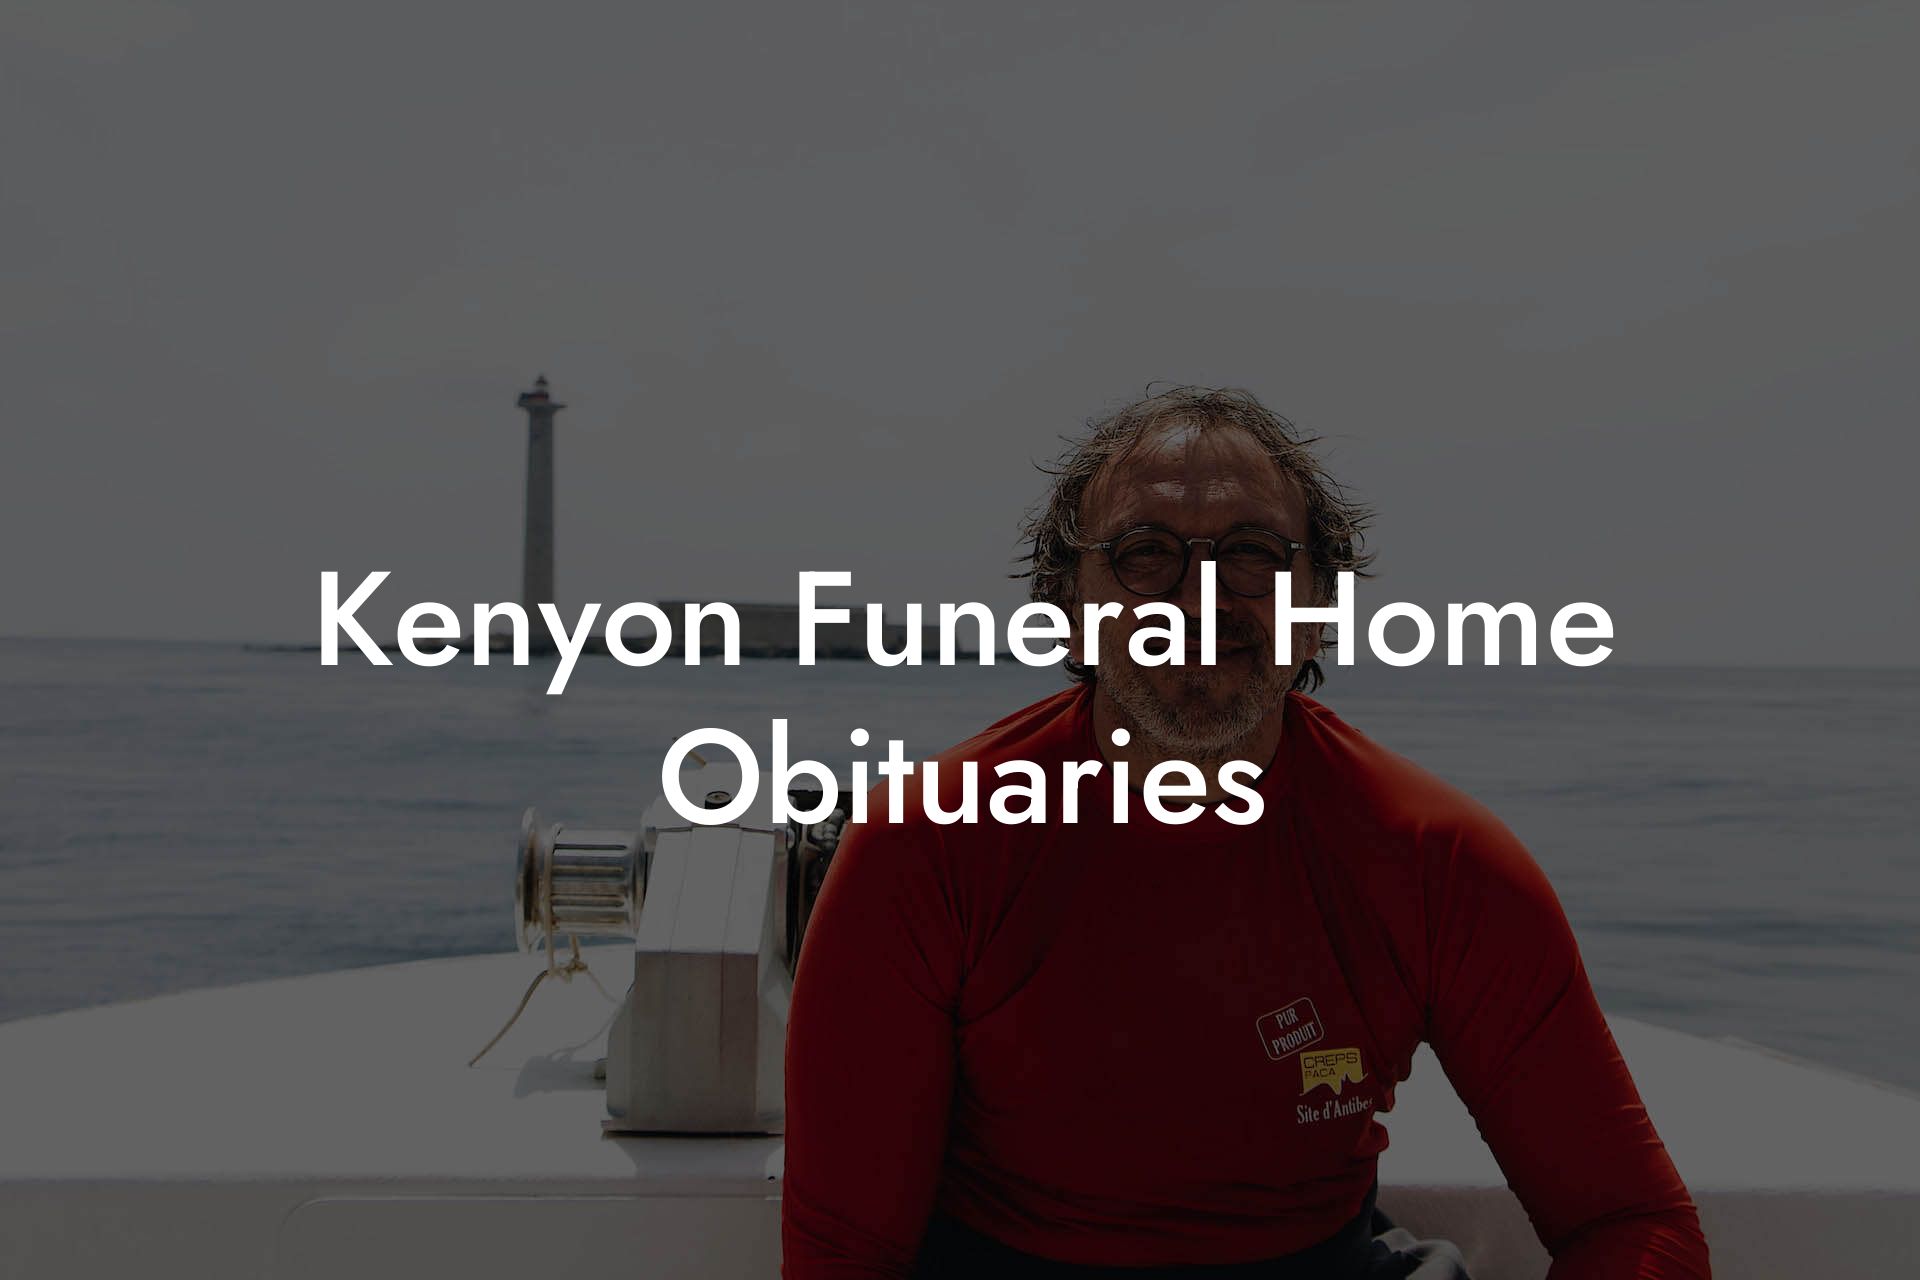 Kenyon Funeral Home Obituaries